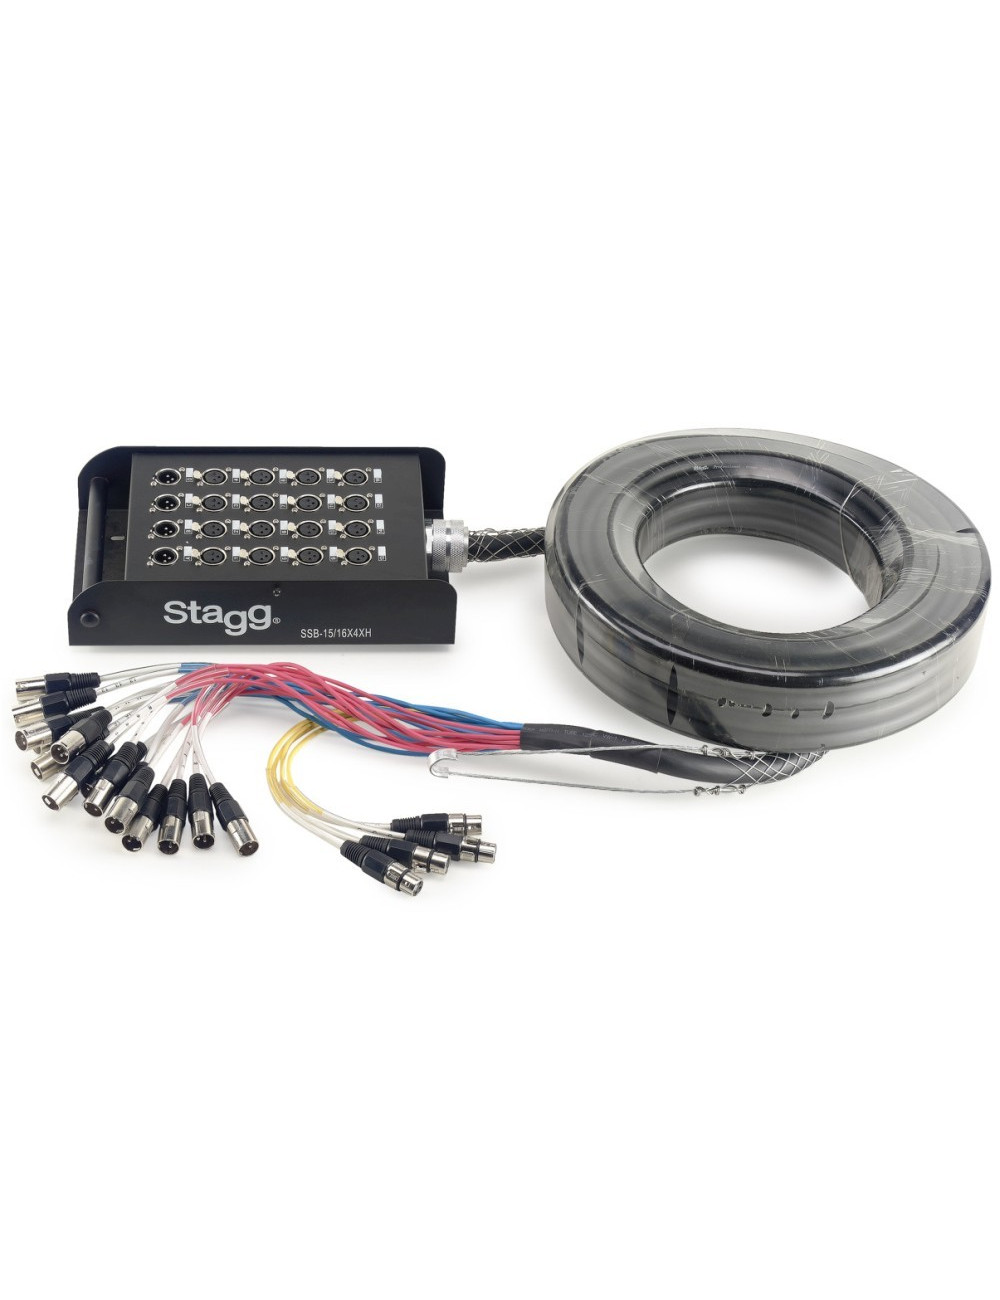 Stagg SSB-15/16x4xH kabel multicore15m